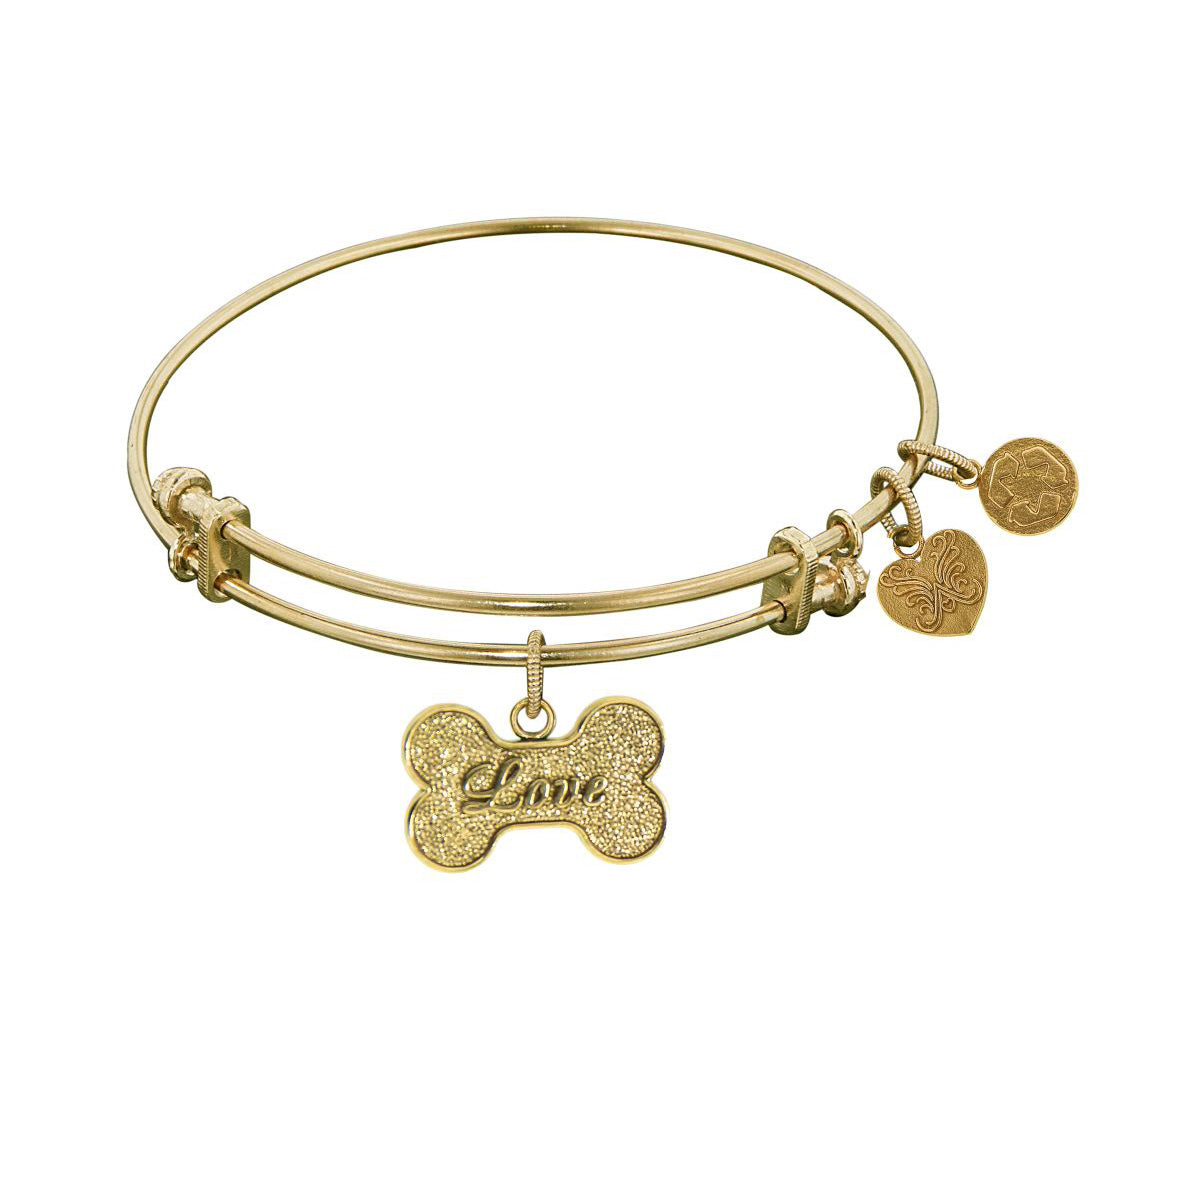 Stipple Finish Brass Bone With Love Angelica Bangle Bracelet, 7.25" fine designer jewelry for men and women